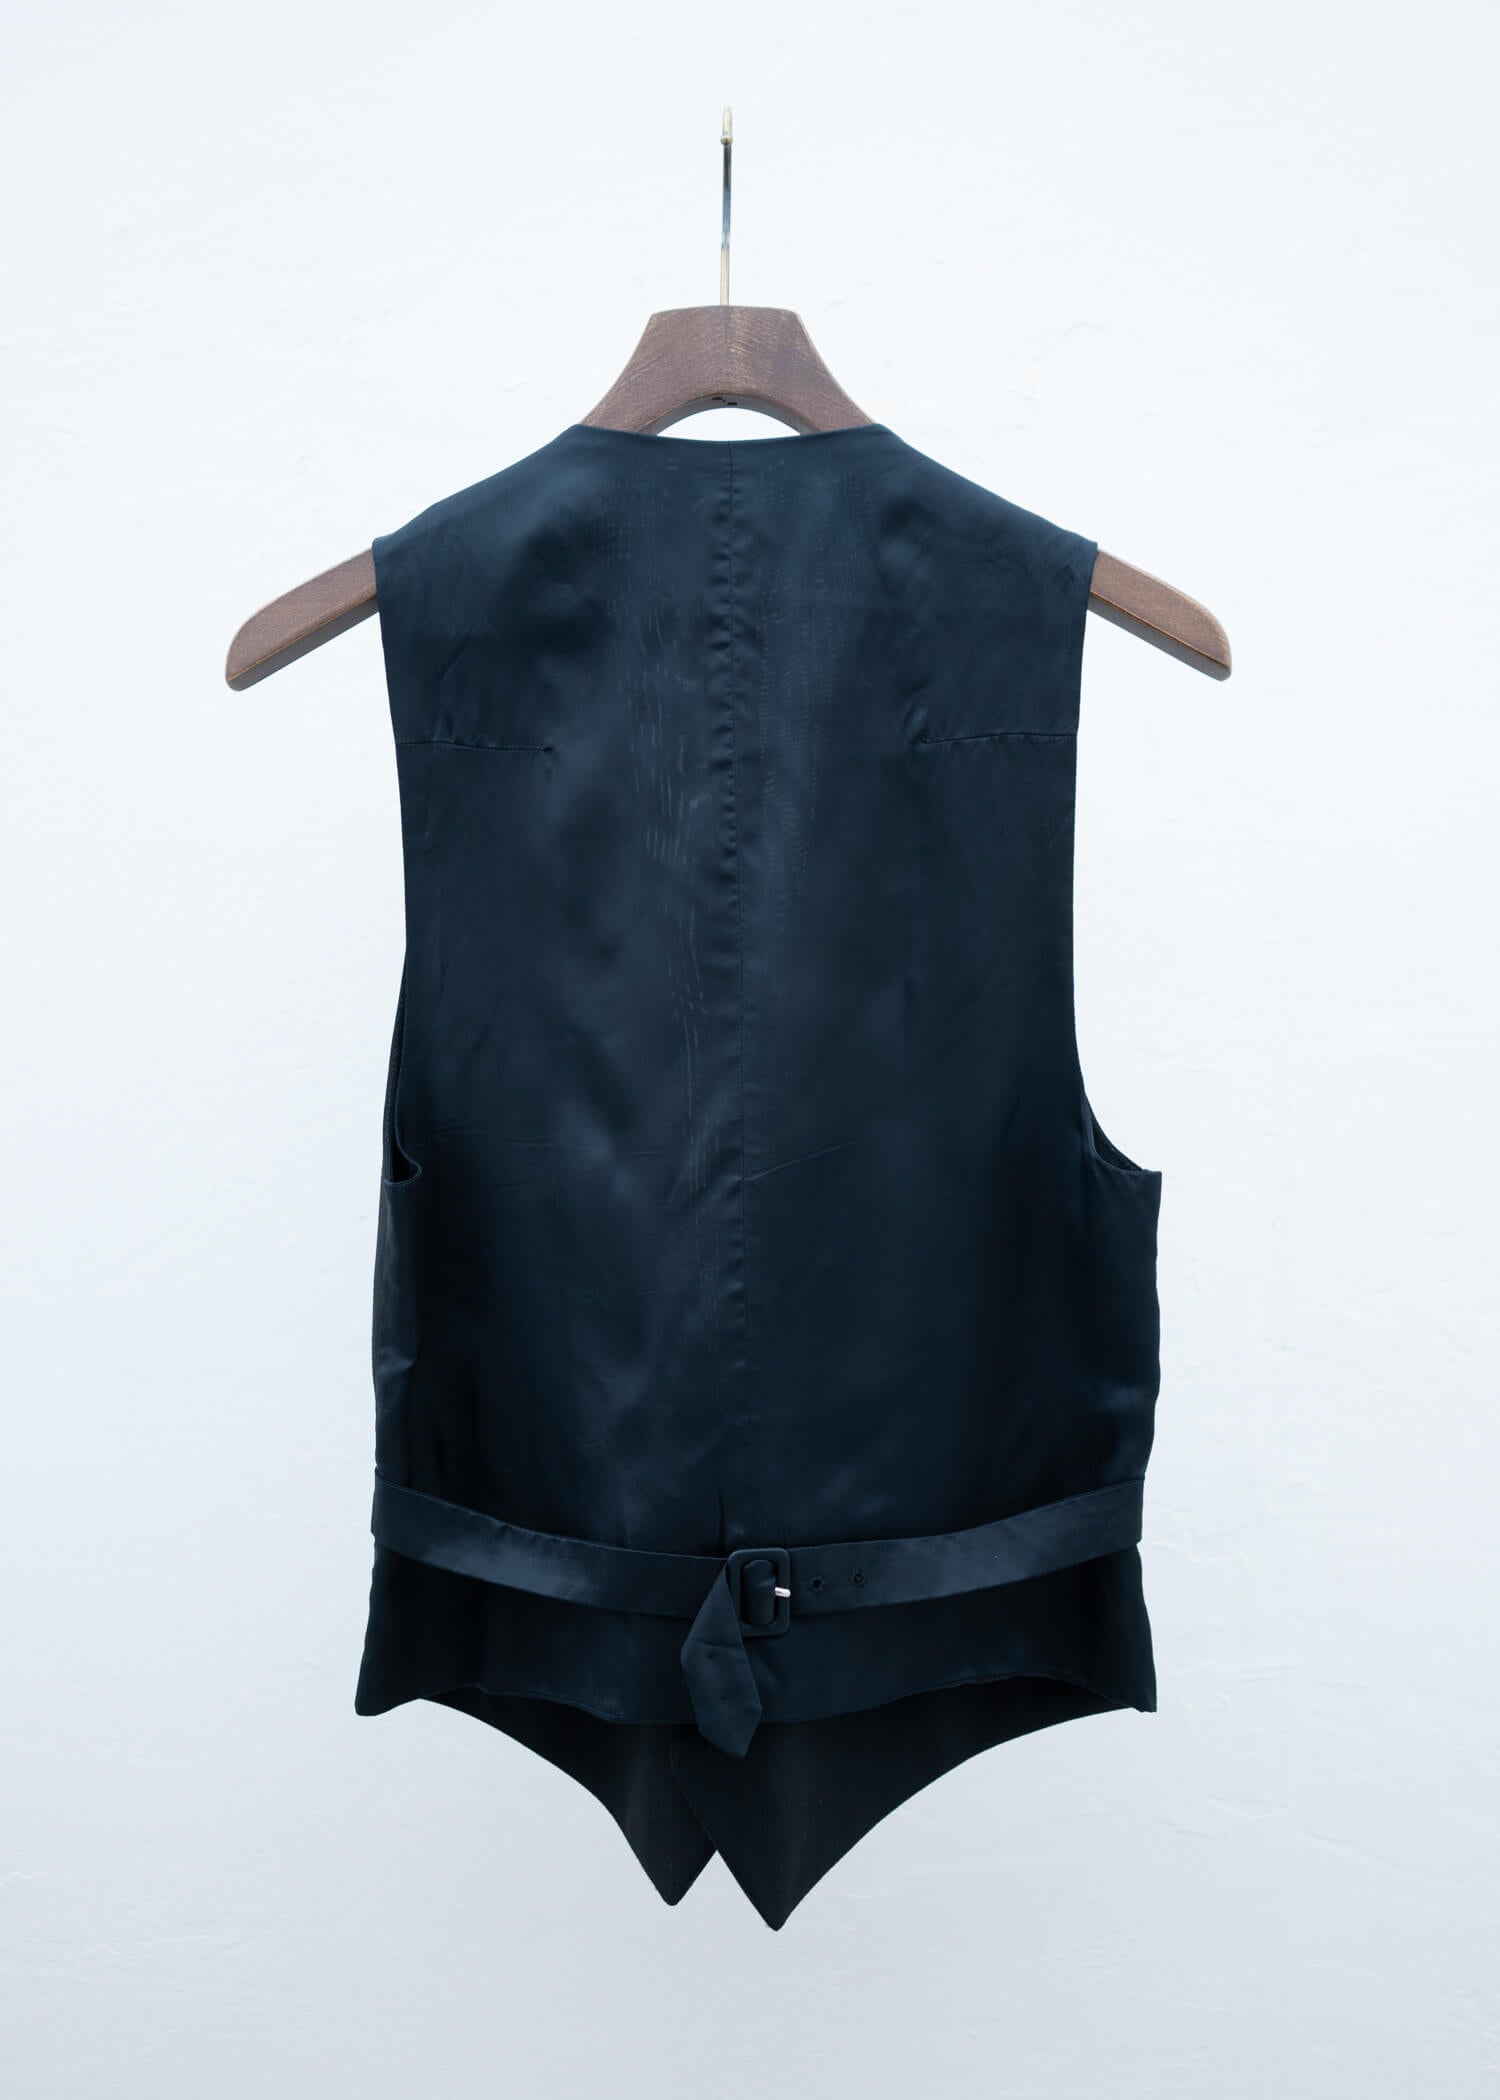 Dior HOMME 09SS Vest